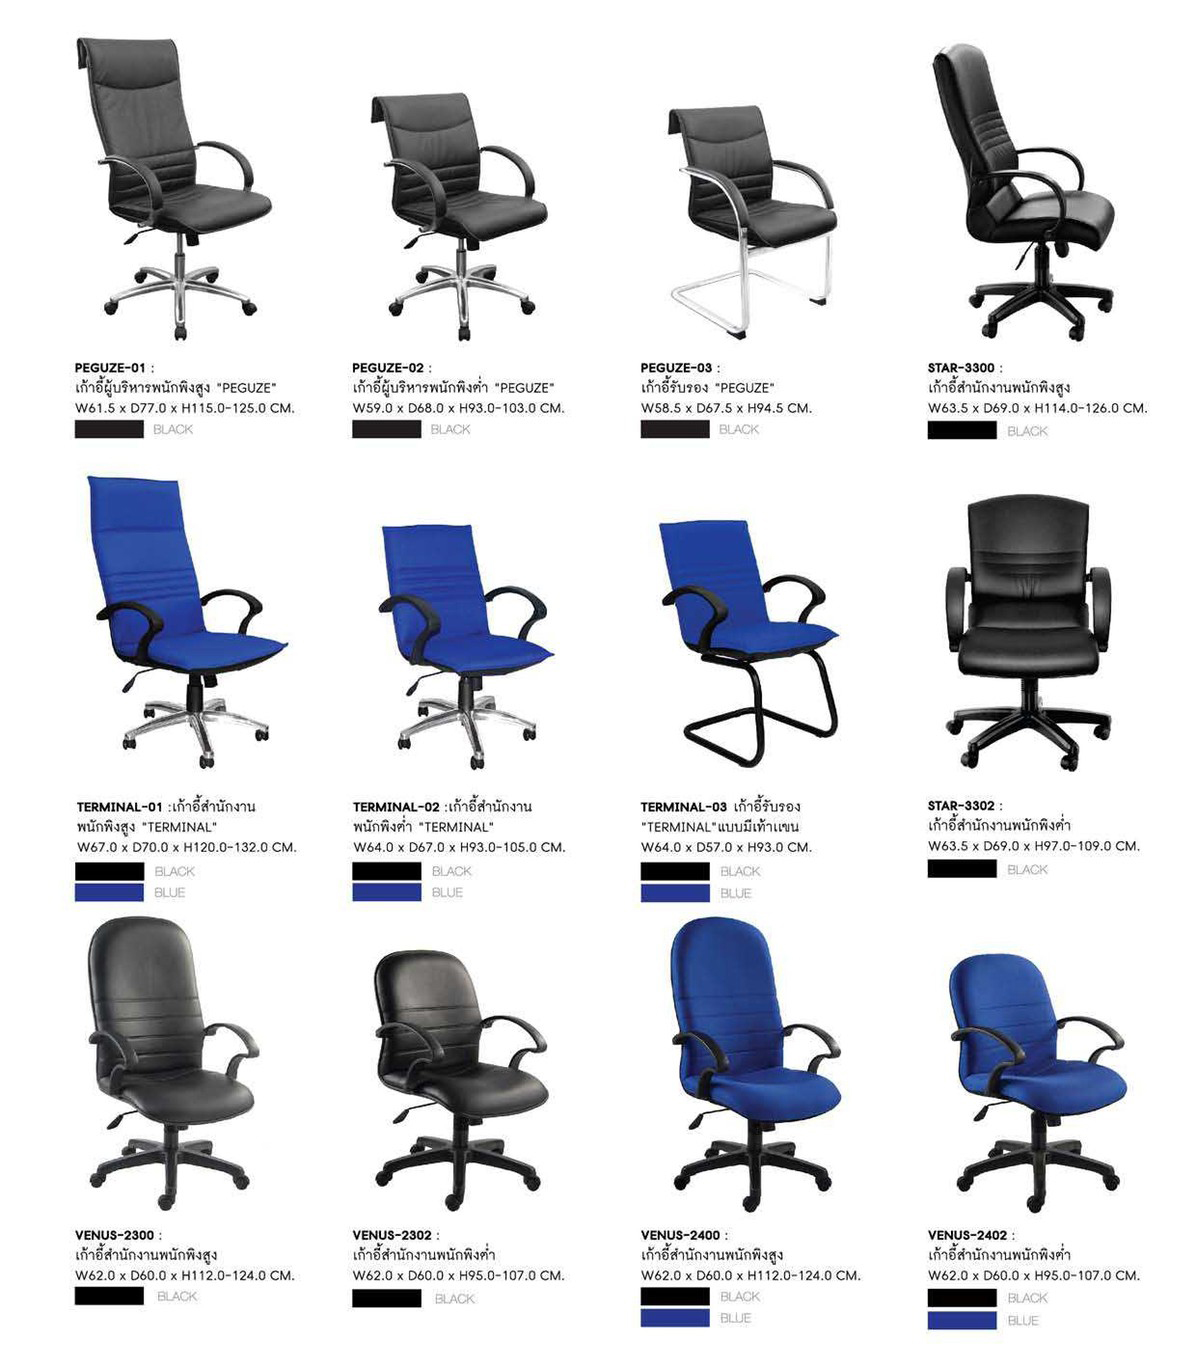 01022::STAR-3300::เก้าอี้สำนักงาน STAR ก630xล720xส1140-1240 มม. บุหนังเทียมPVC สีดำ เก้าอี้สำนักงาน SURE